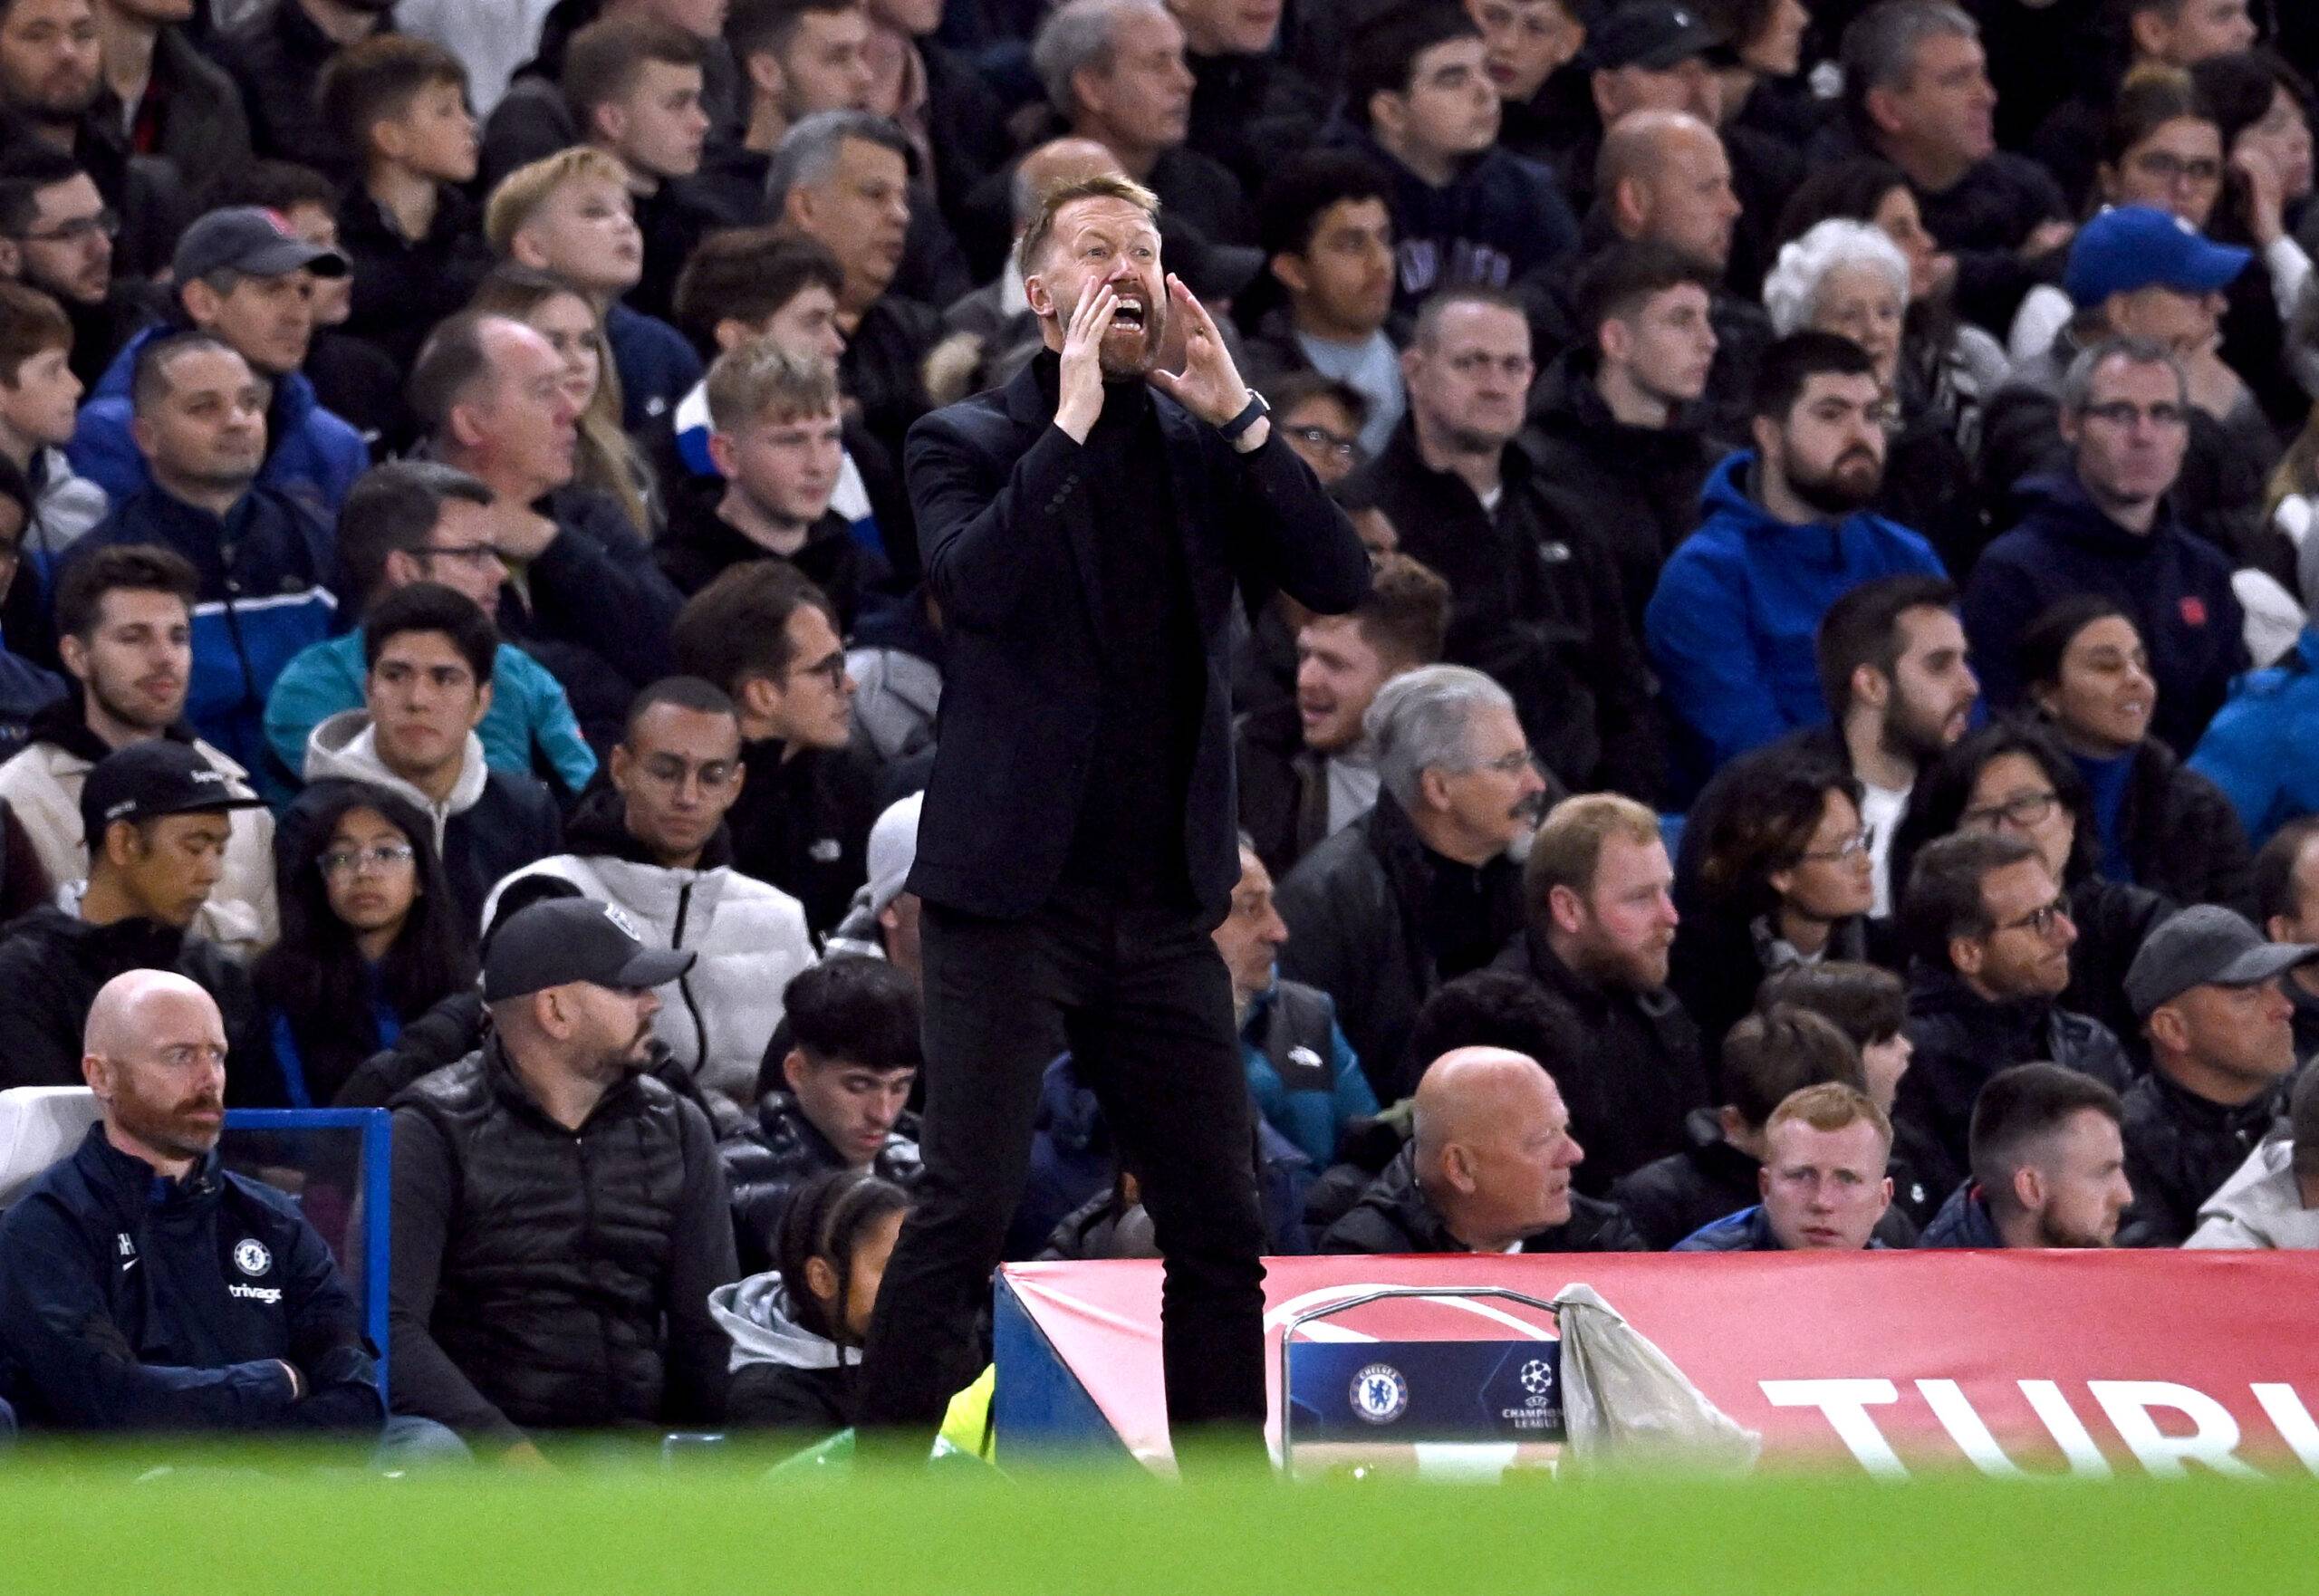 Chelsea manager Graham Potter shouting instructions